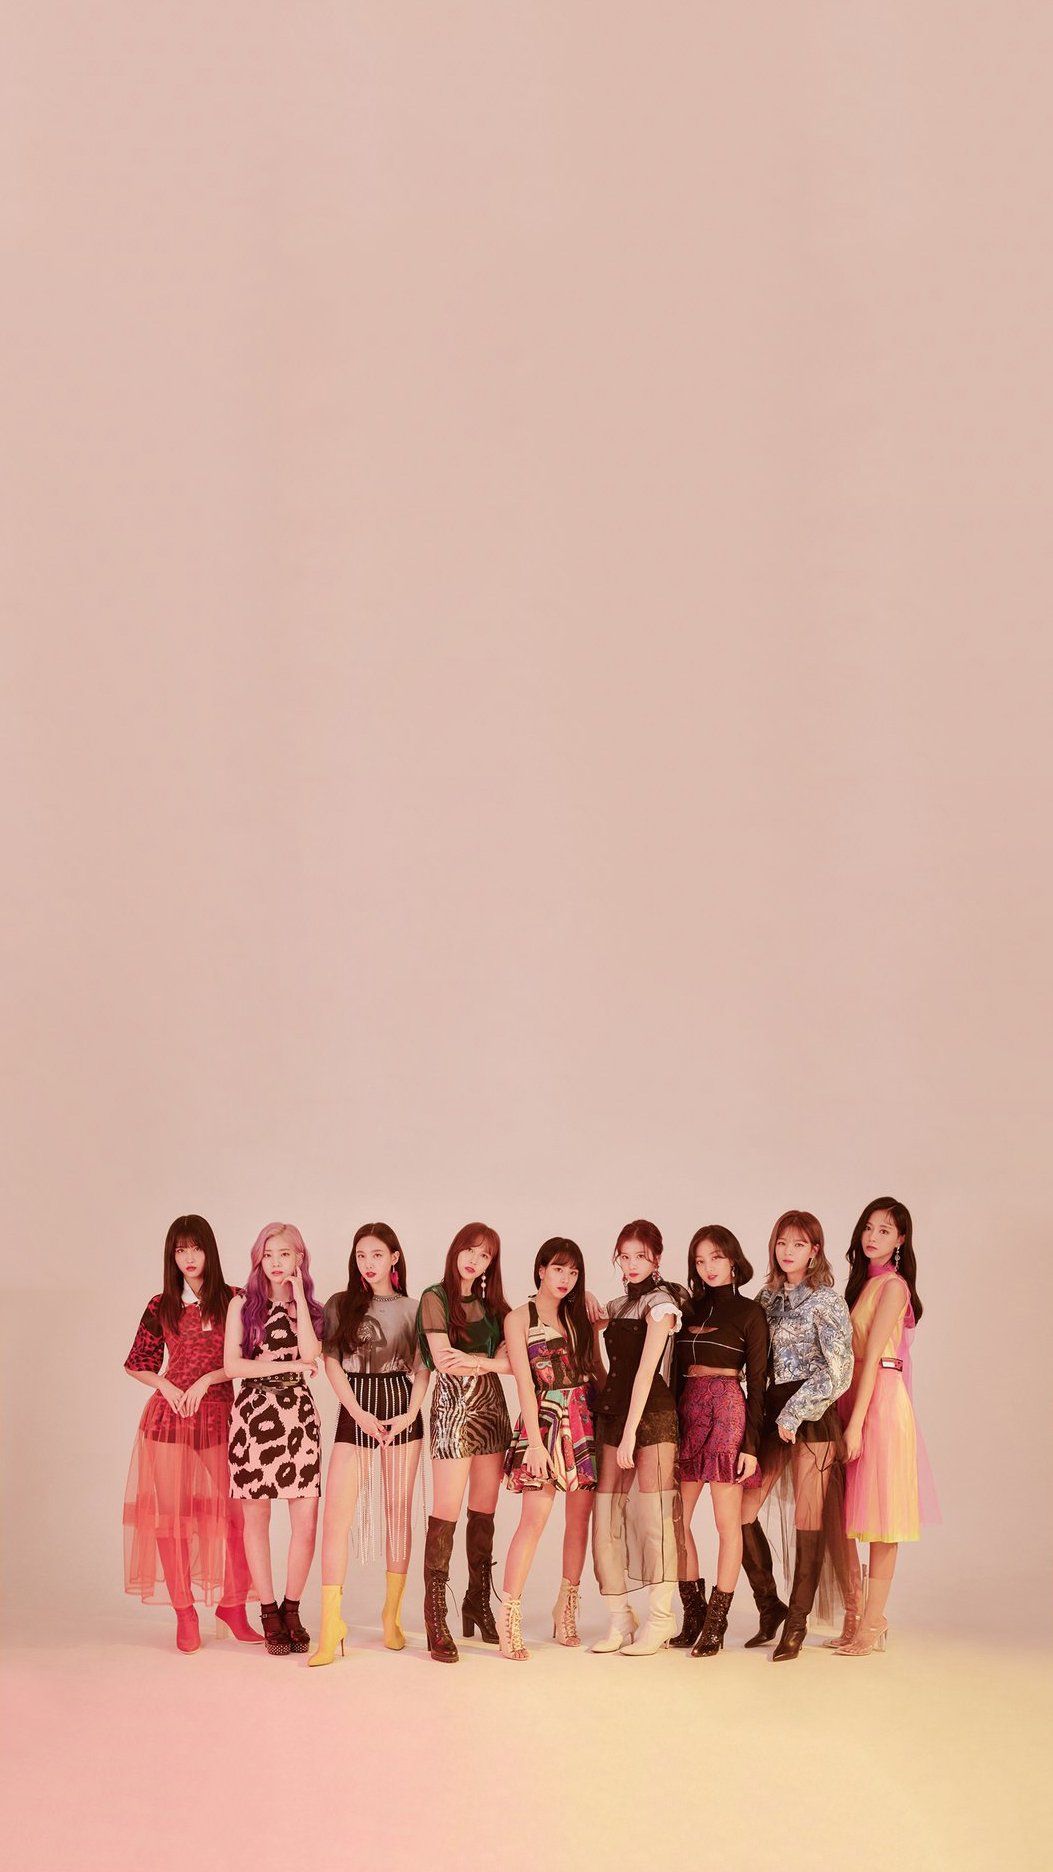 тwιce wallpaperѕ on Twitter. Kpop wallpaper, Twice, Korean girl groups